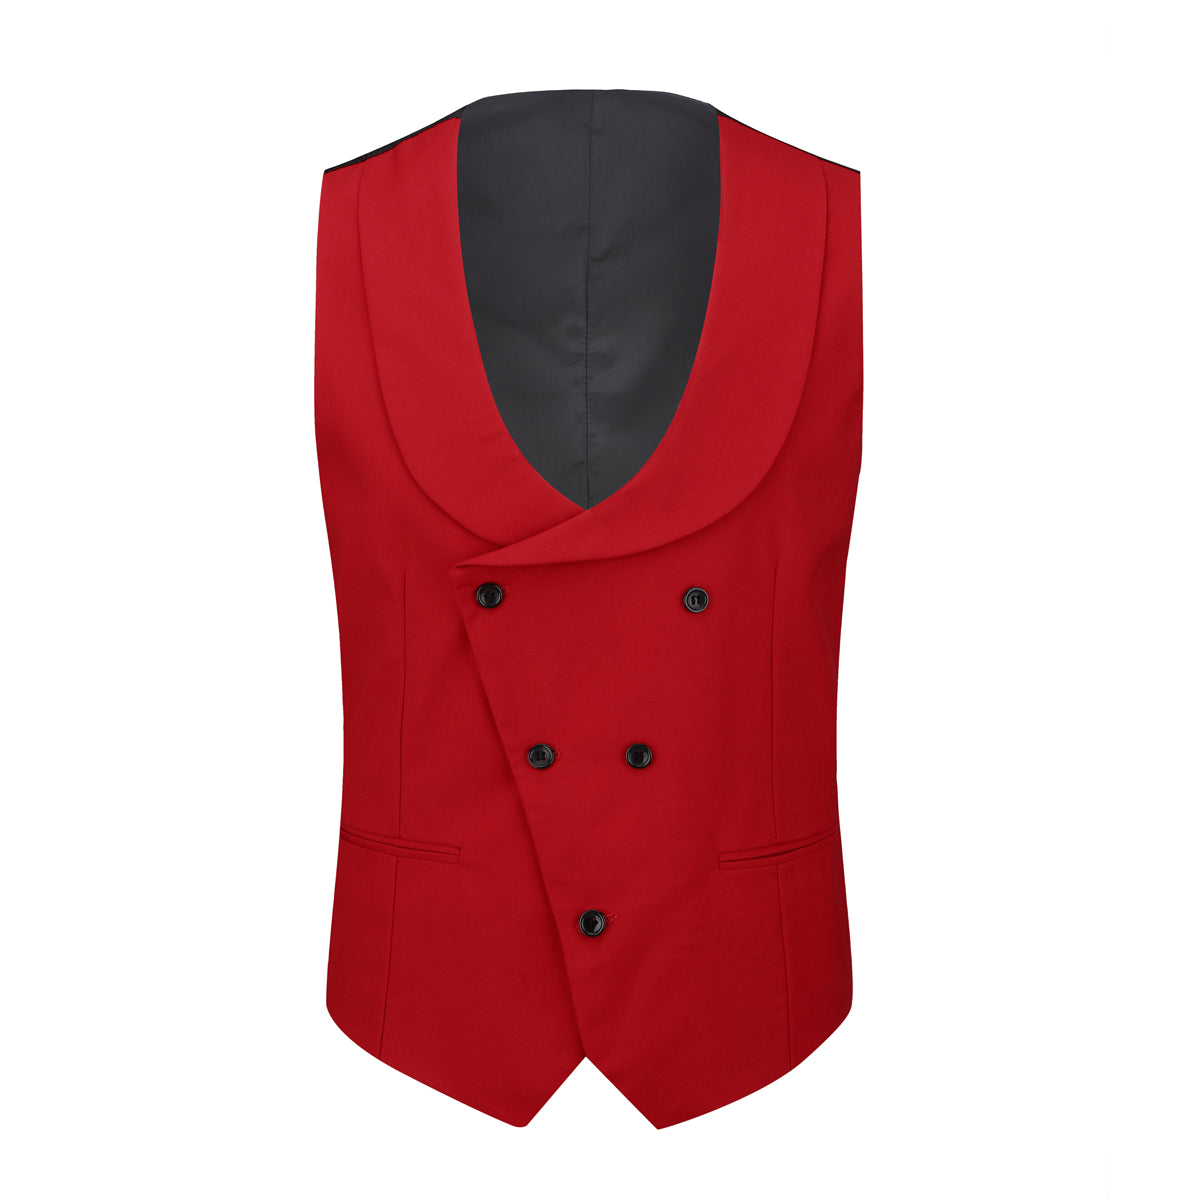 Men's 3-Piece Fashion One Button Color-Blocking Suit Red